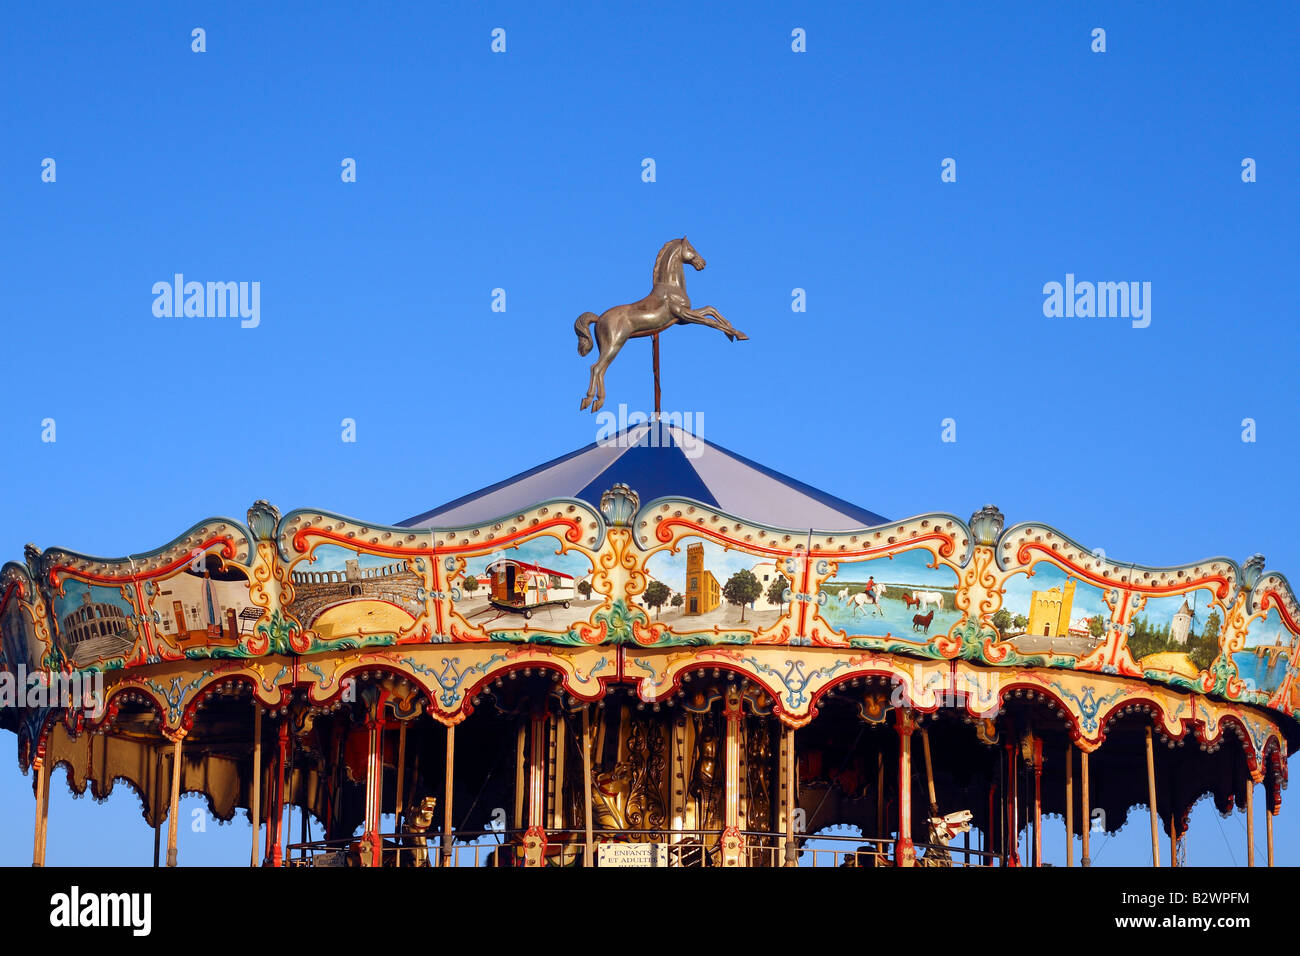 Traditional Carousel in Les Saintes Maries de La Mer, Camargue, Provence France Stock Photo